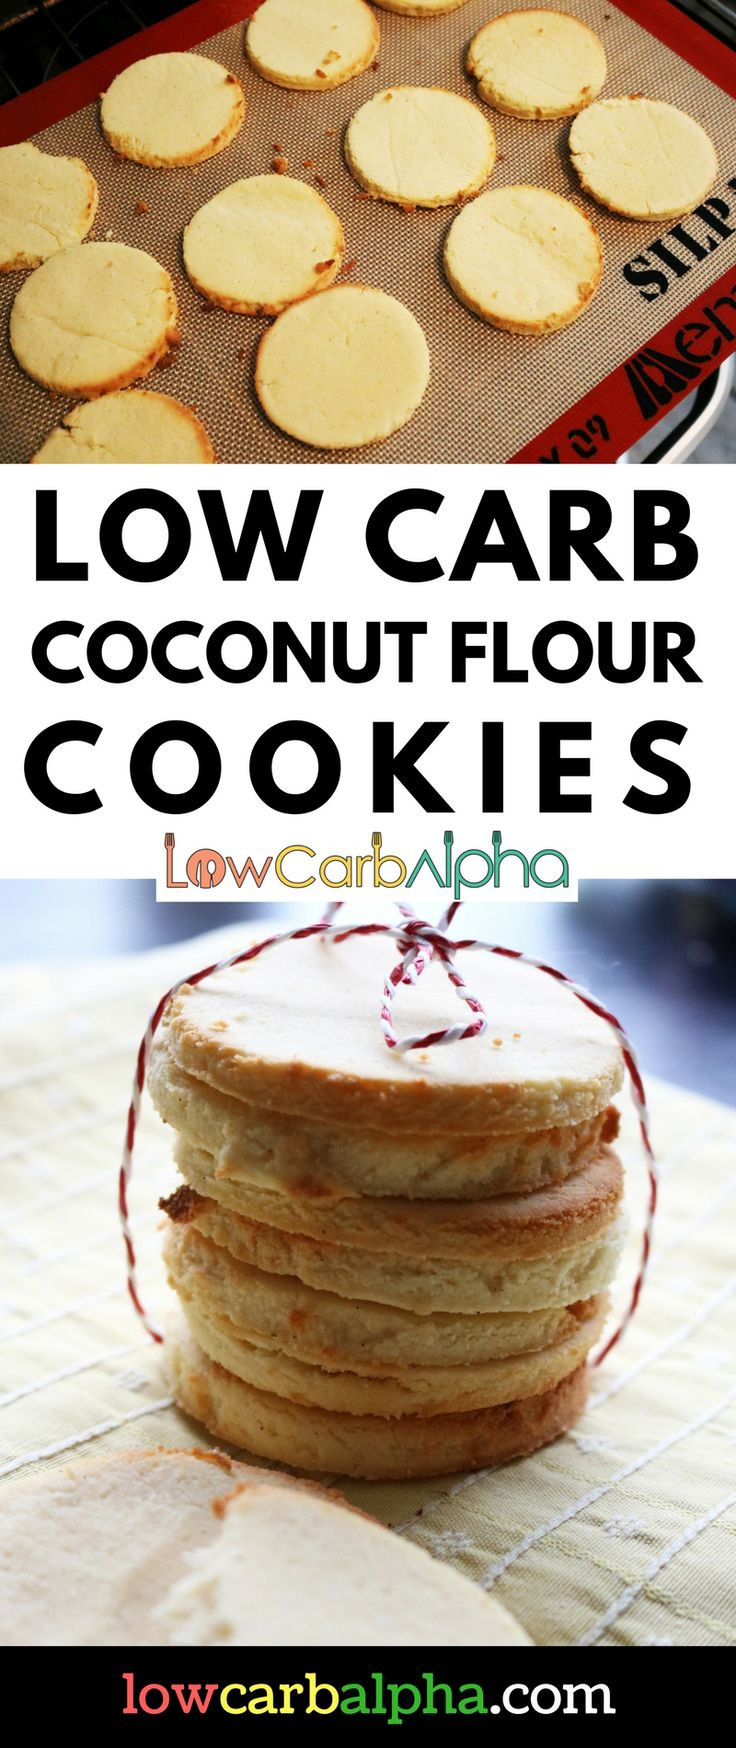 Low Carb Recipes With Coconut Flour
 Best 25 Coconut flour cookie recipes ideas on Pinterest